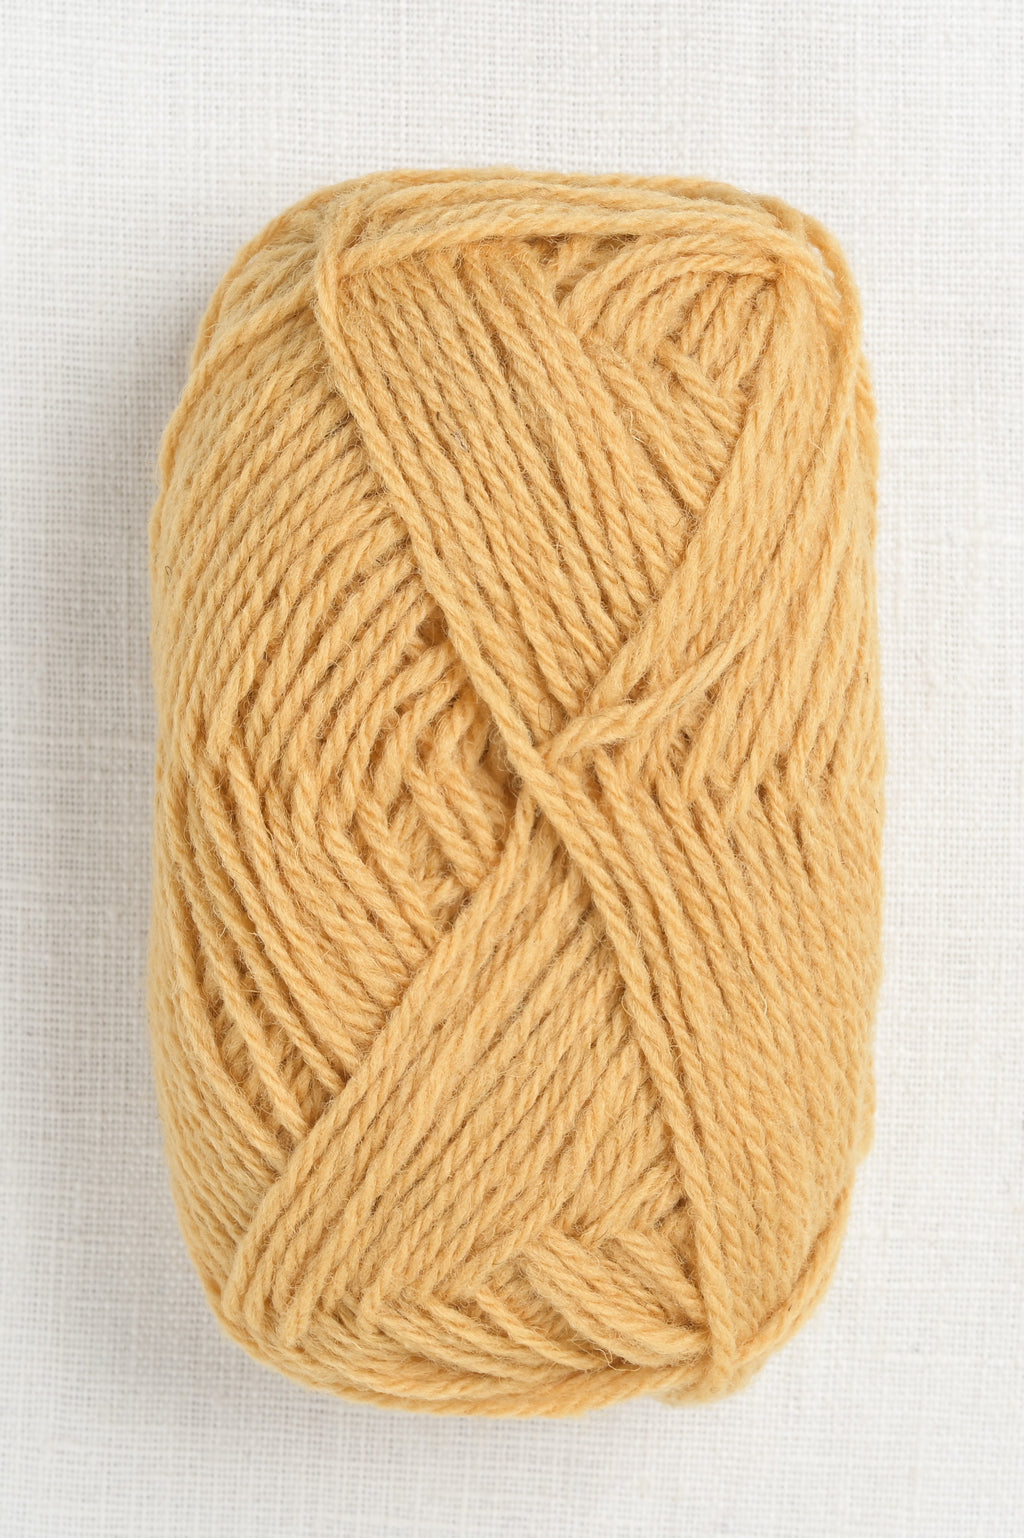 jamieson's shetland double knitting 375 flax